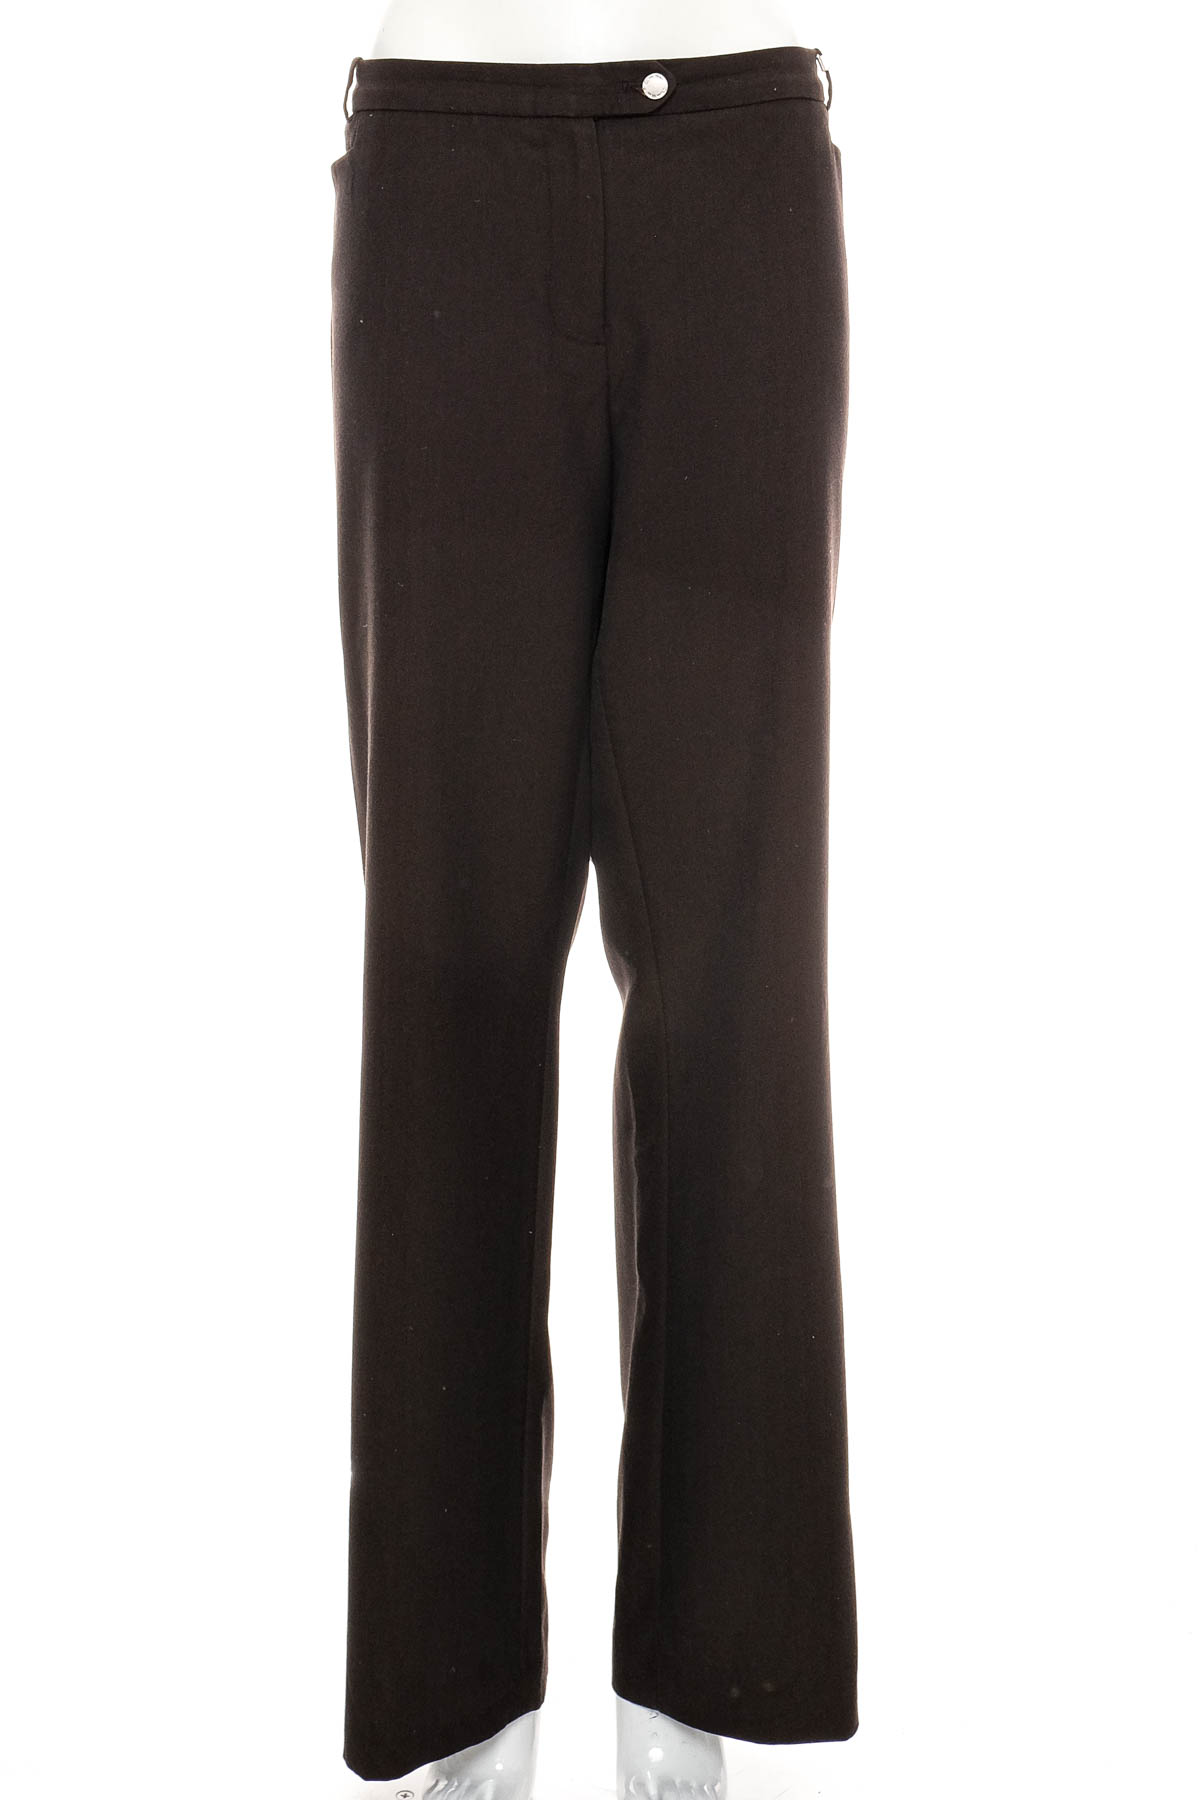 Women's trousers - Calvin Klein - 0